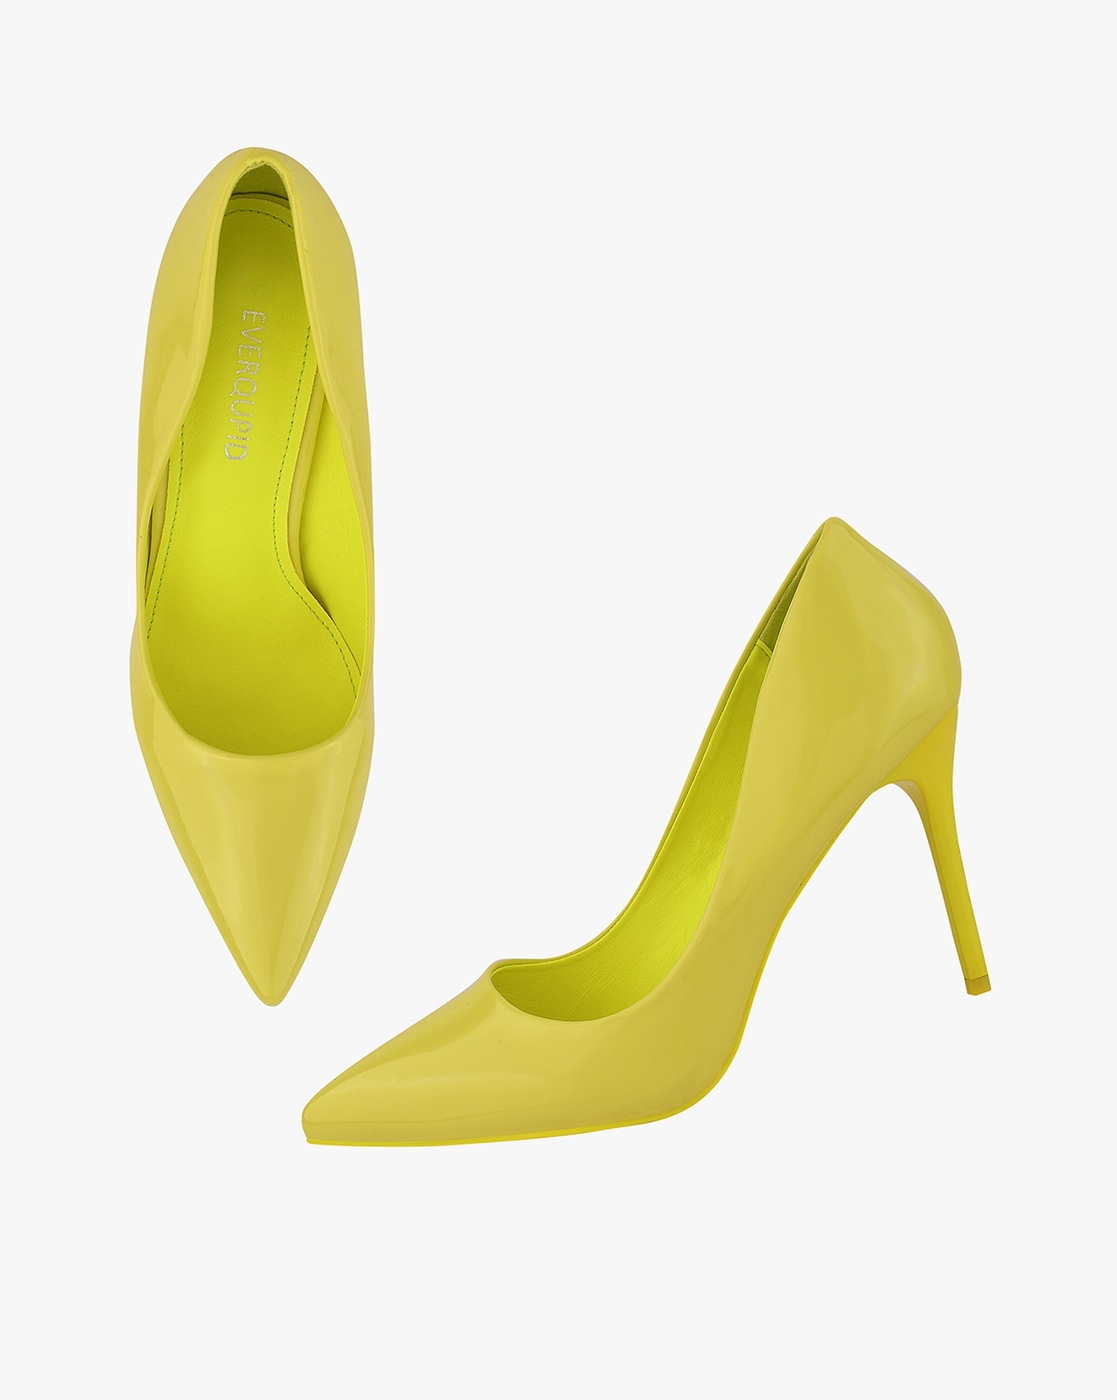 Yellow High Heel Shoes Neon | High Heel Shoes Neon Pink | Neon Pumps Women  Shoes - Red - Aliexpress